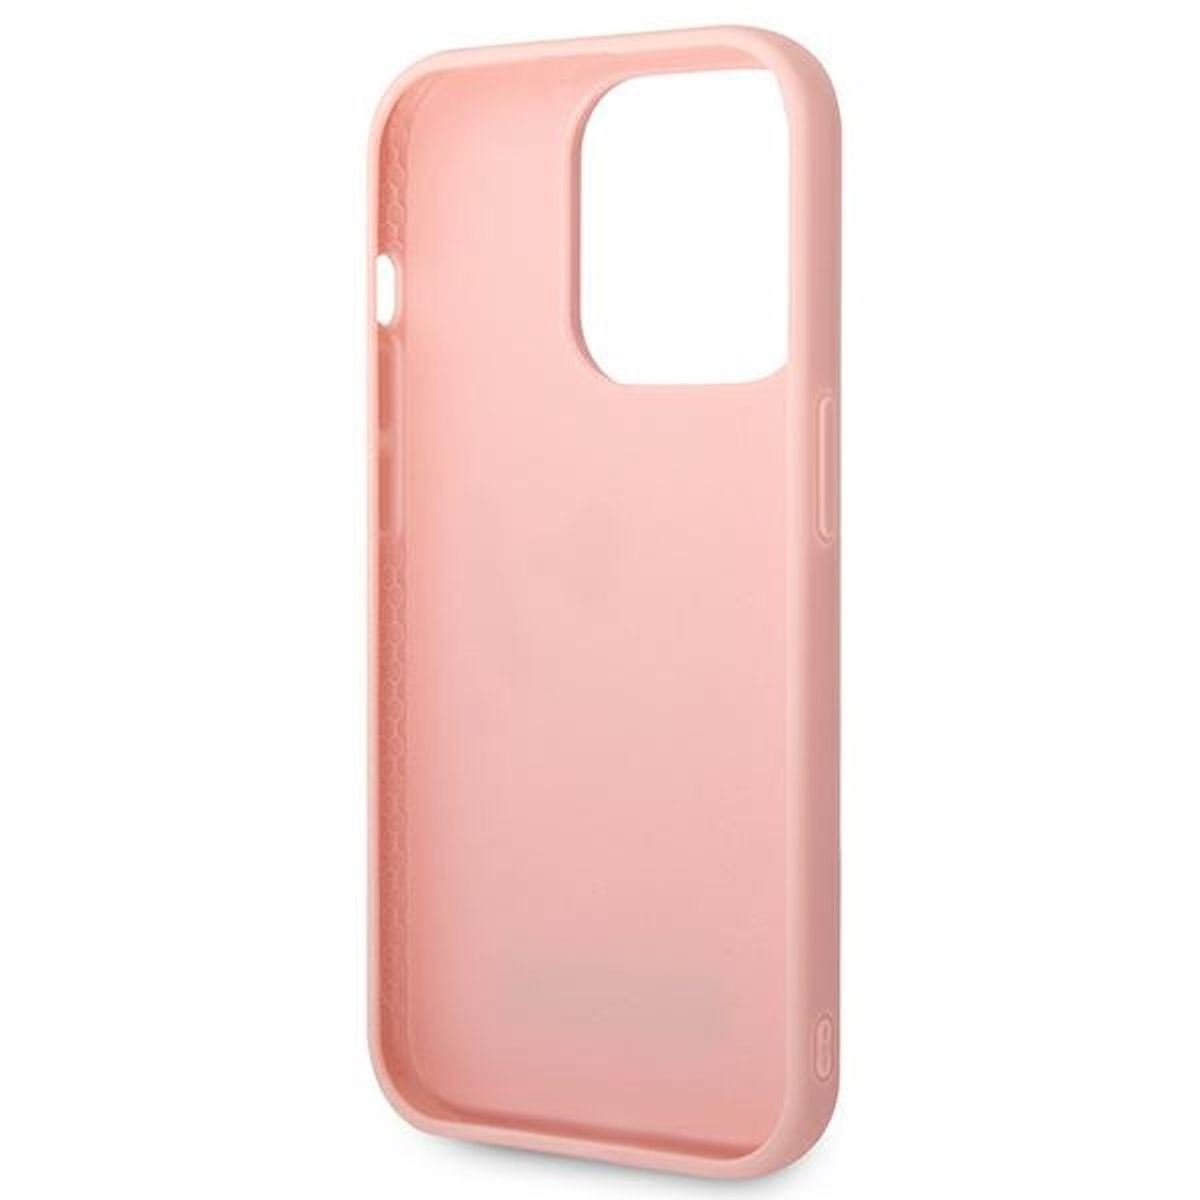 14 3D Pink iPhone Hülle, Backcover, Monogram Apple, LAGERFELD Design KARL Pro Max,